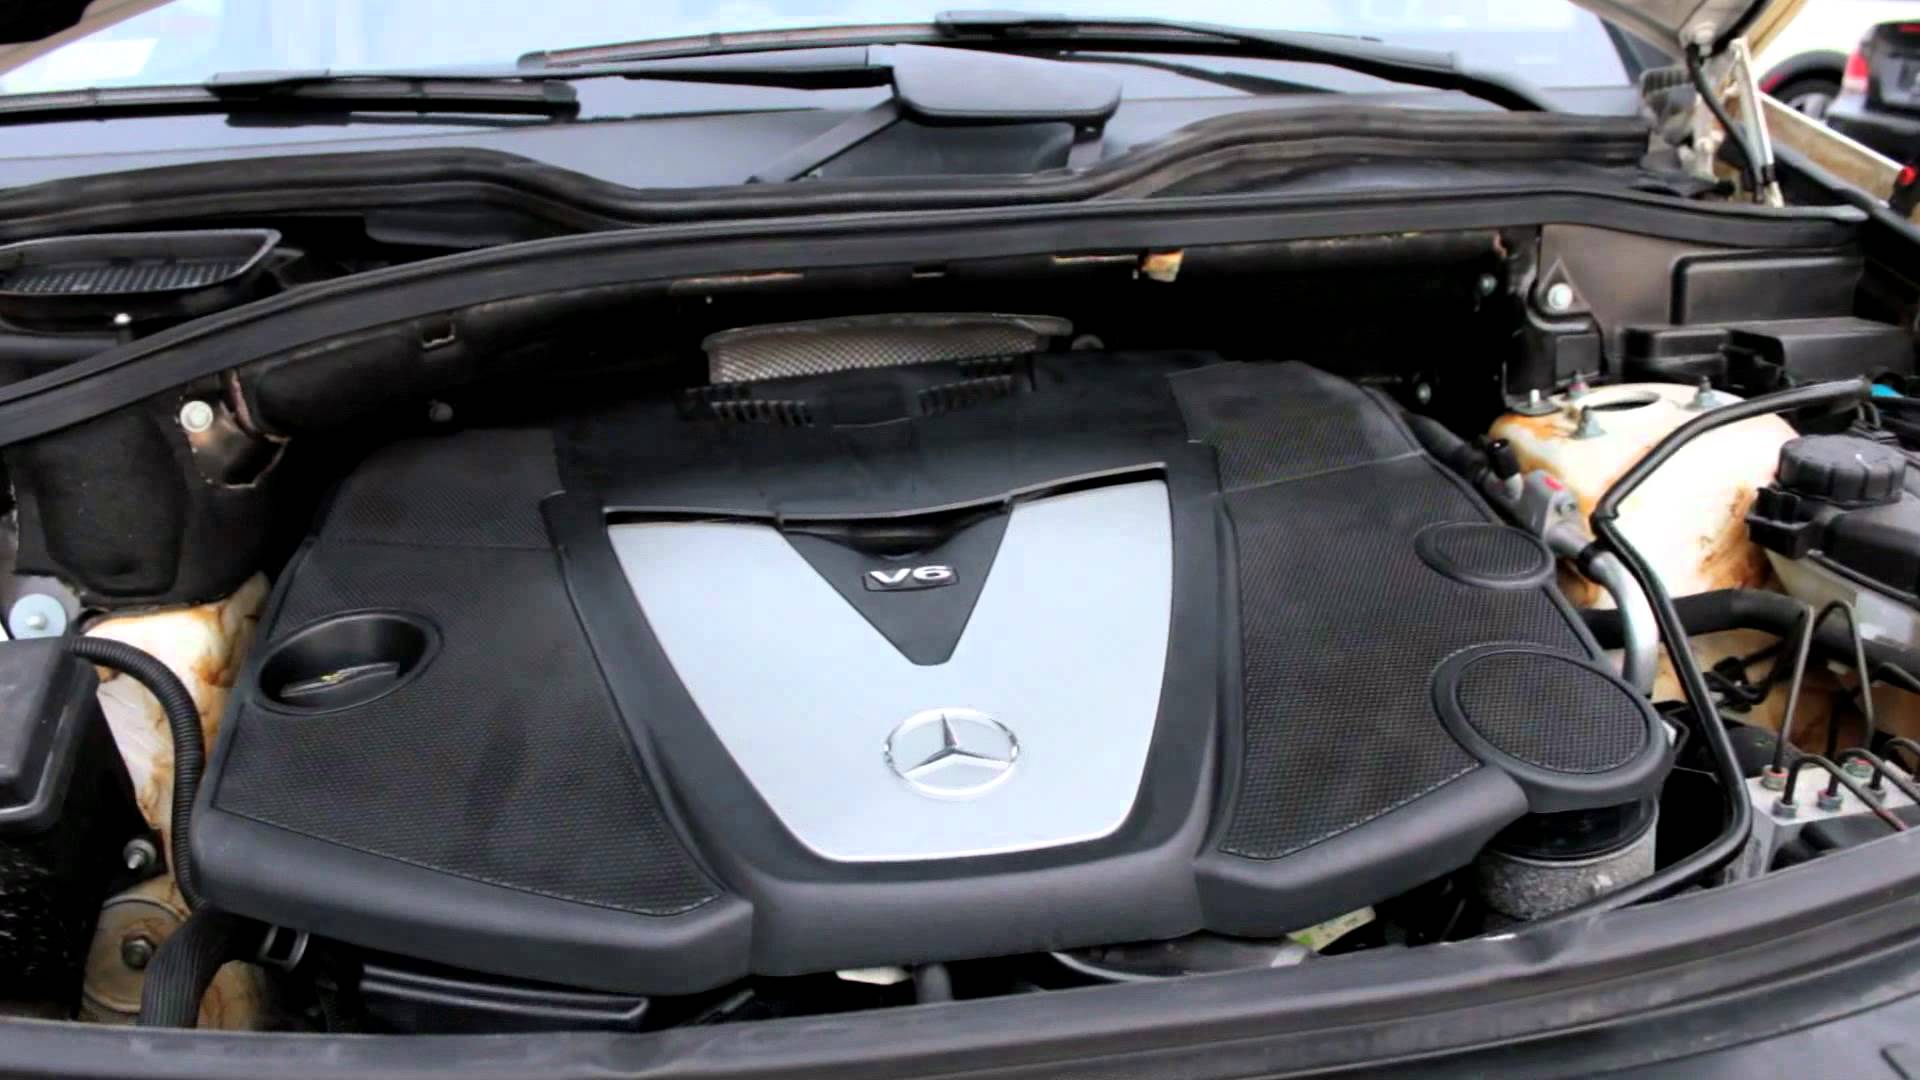 Mercedes Benz ML320 CDI Luxury Cars Toronto